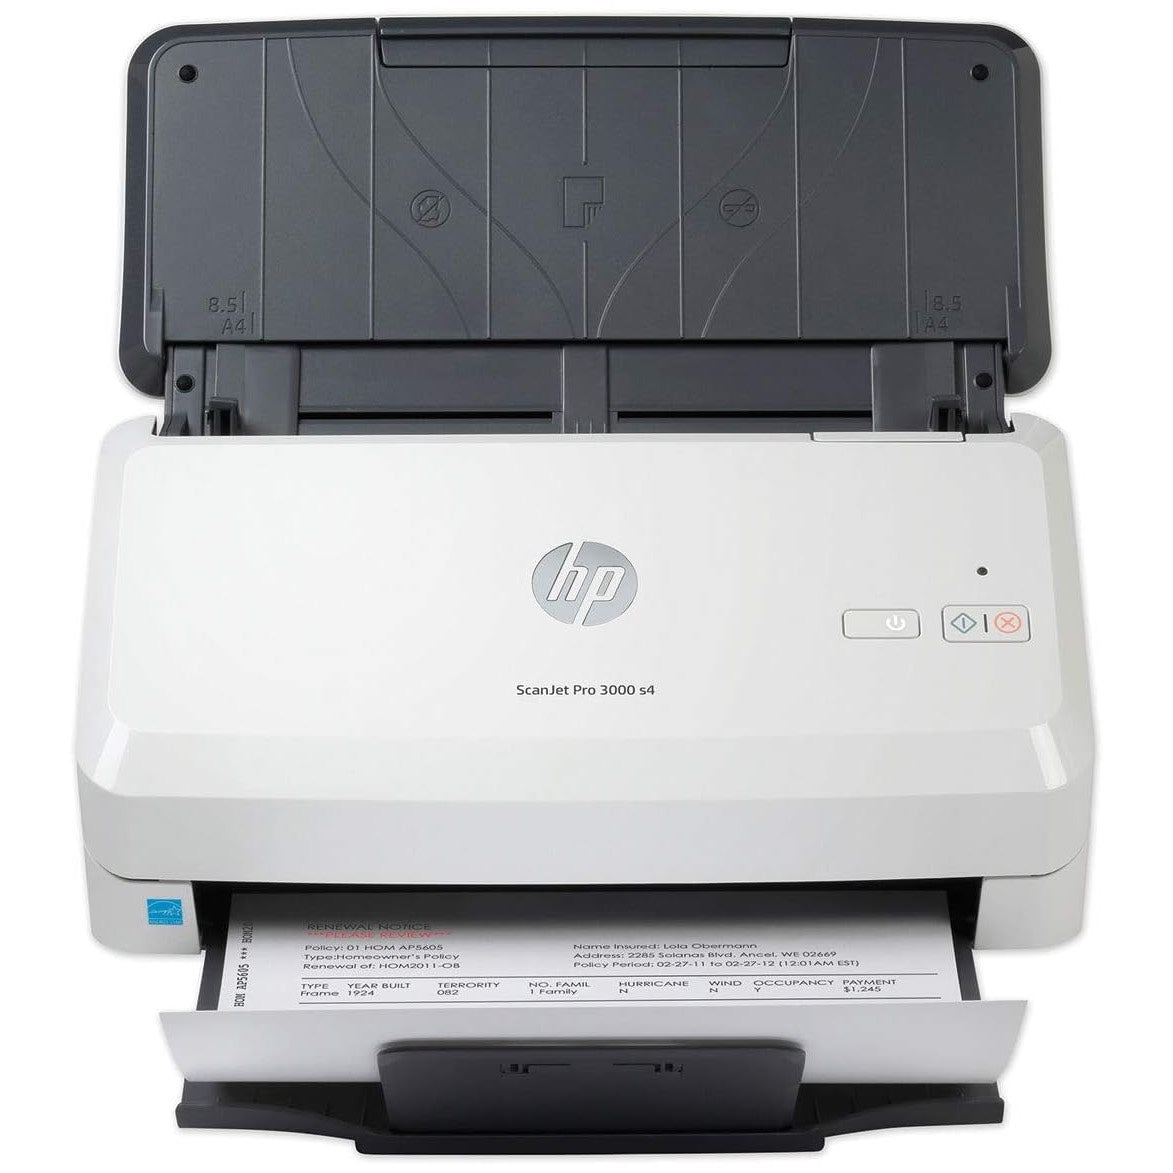 Escáner HP Scanjet Pro 3000 | 6FW07A | USB 3.0 | Color Gris Claro